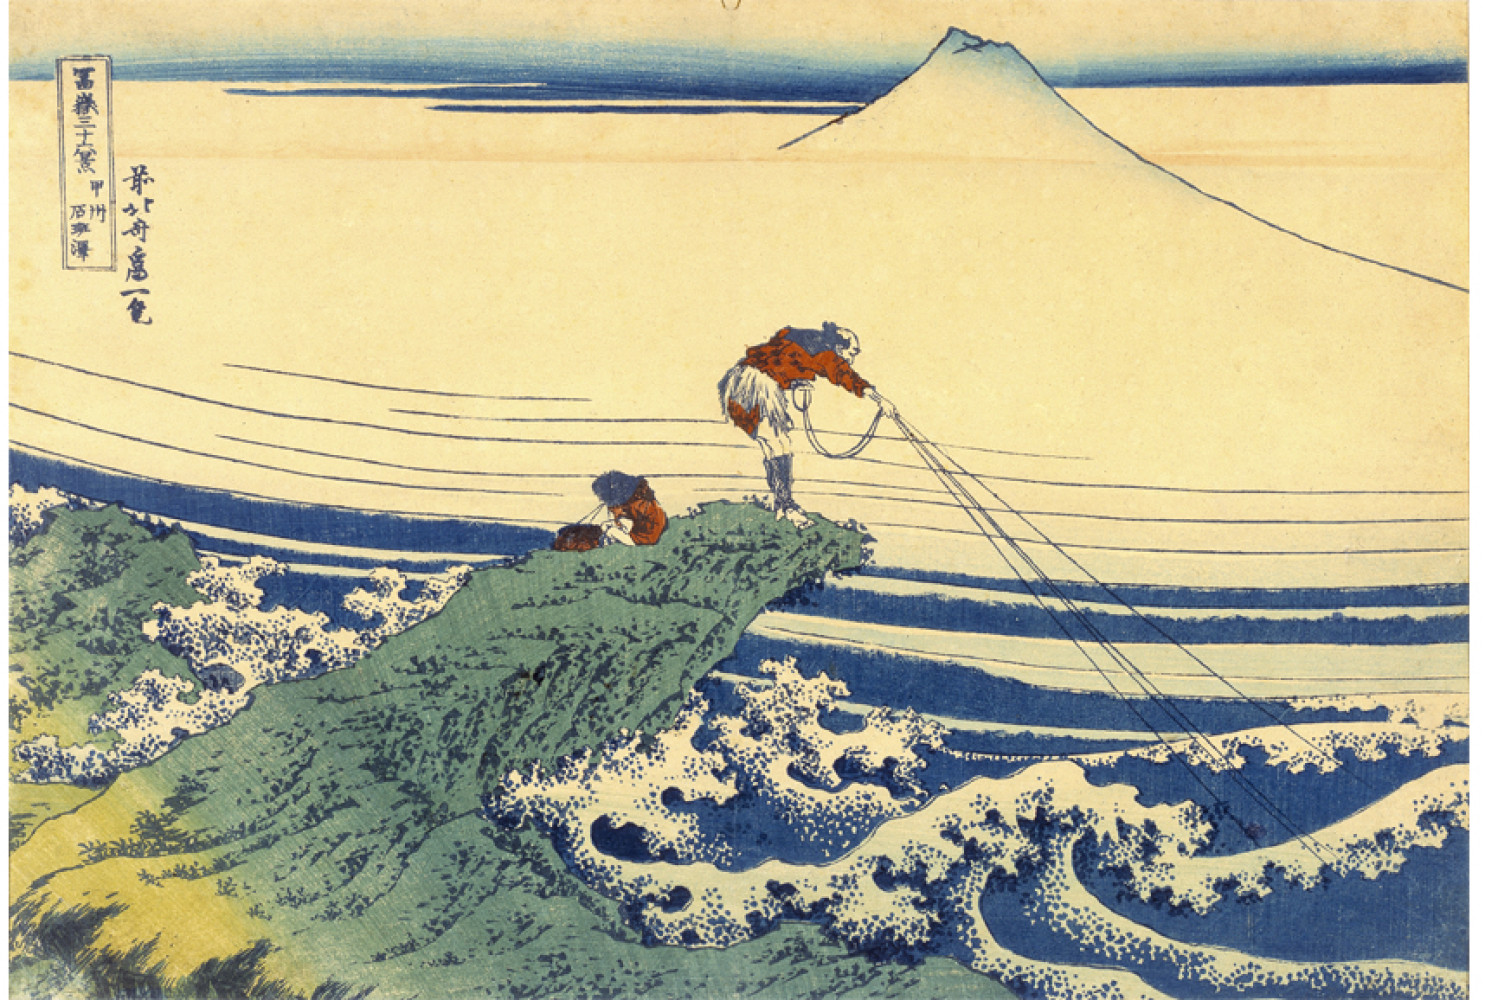 KATSUSHIKA HOKUSAI (1760—1849) Fuji from Kajikazawa in Kai Province from the series Thirty-six Views of Fuji, ca. 1831, Color woodblock print, 10 1/4 x 14 3/4 inches